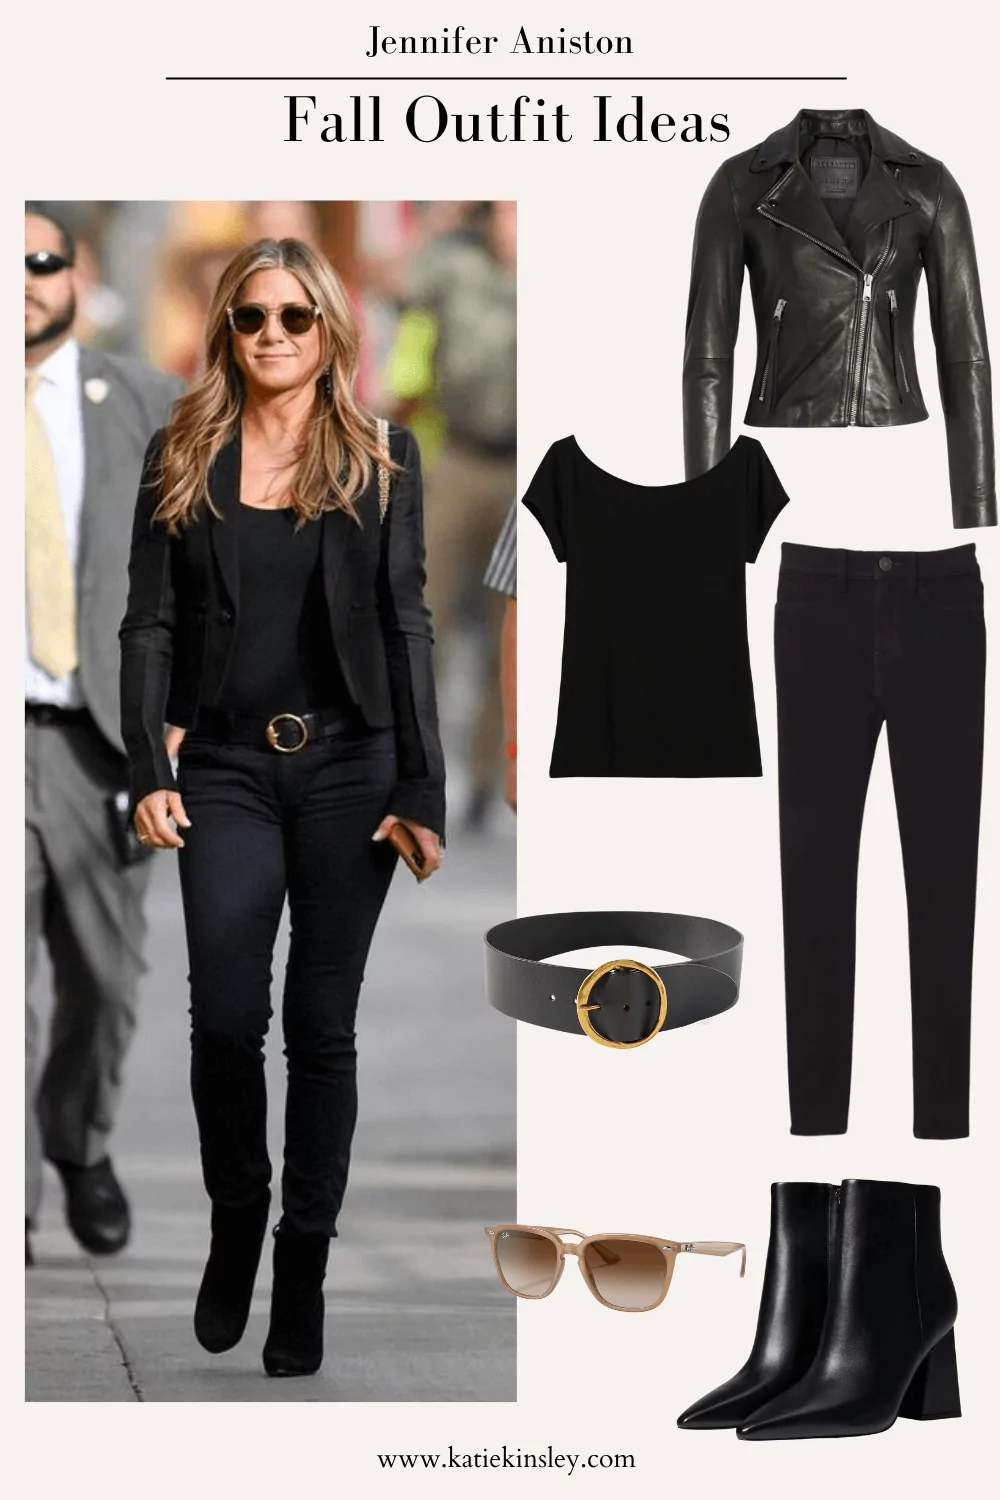 Fall Outfit Ideas Jennifer Aniston